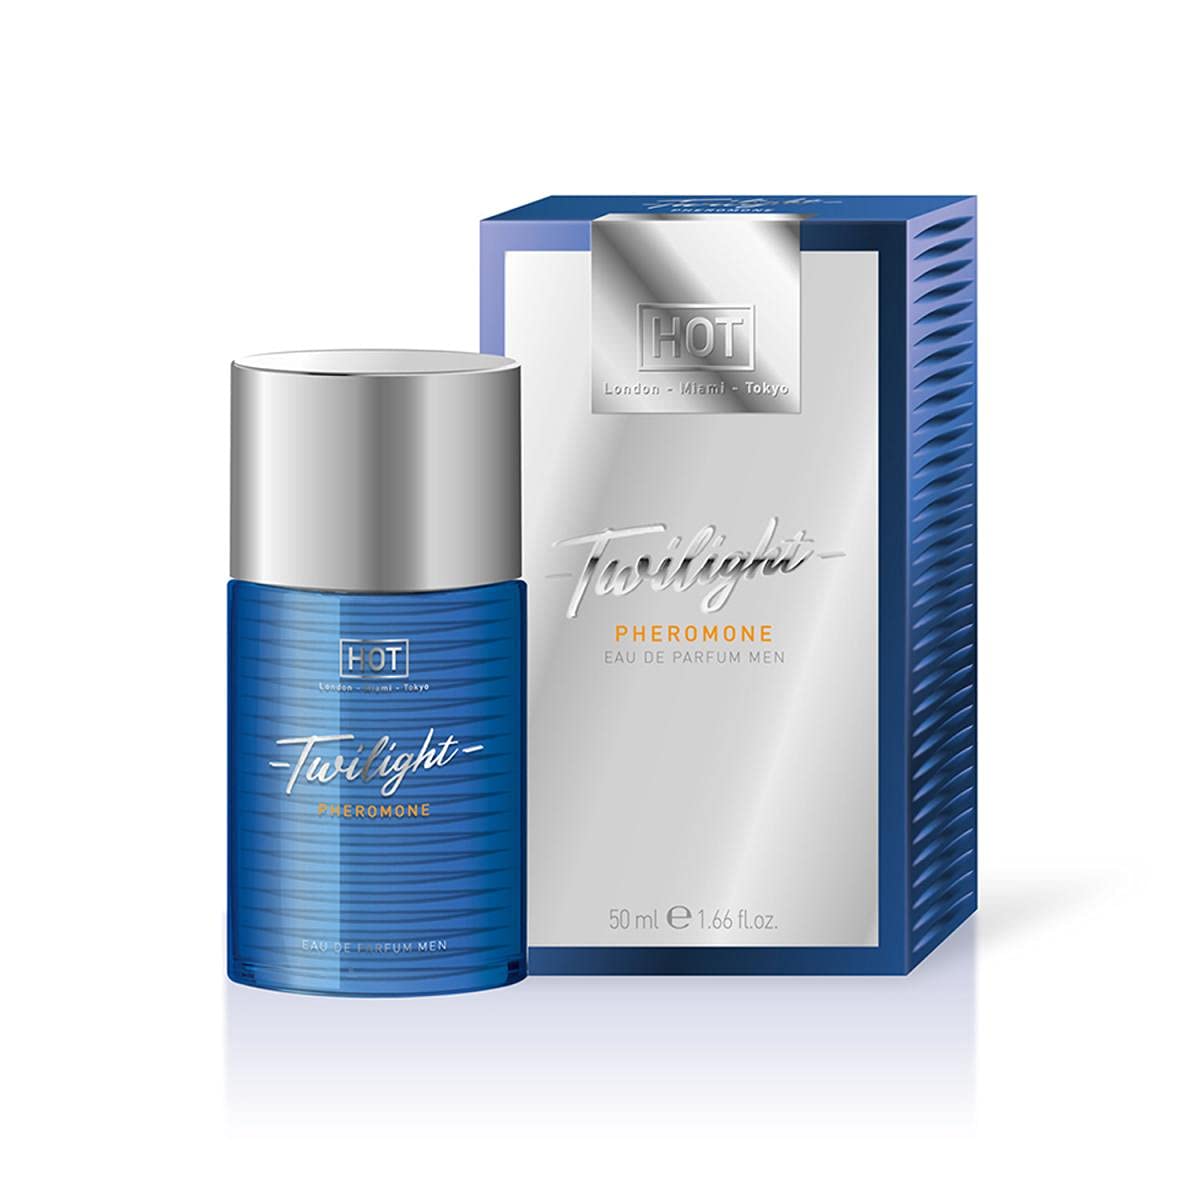 HOT Twilight Pheromone Eau de Parfum men, 50 ml